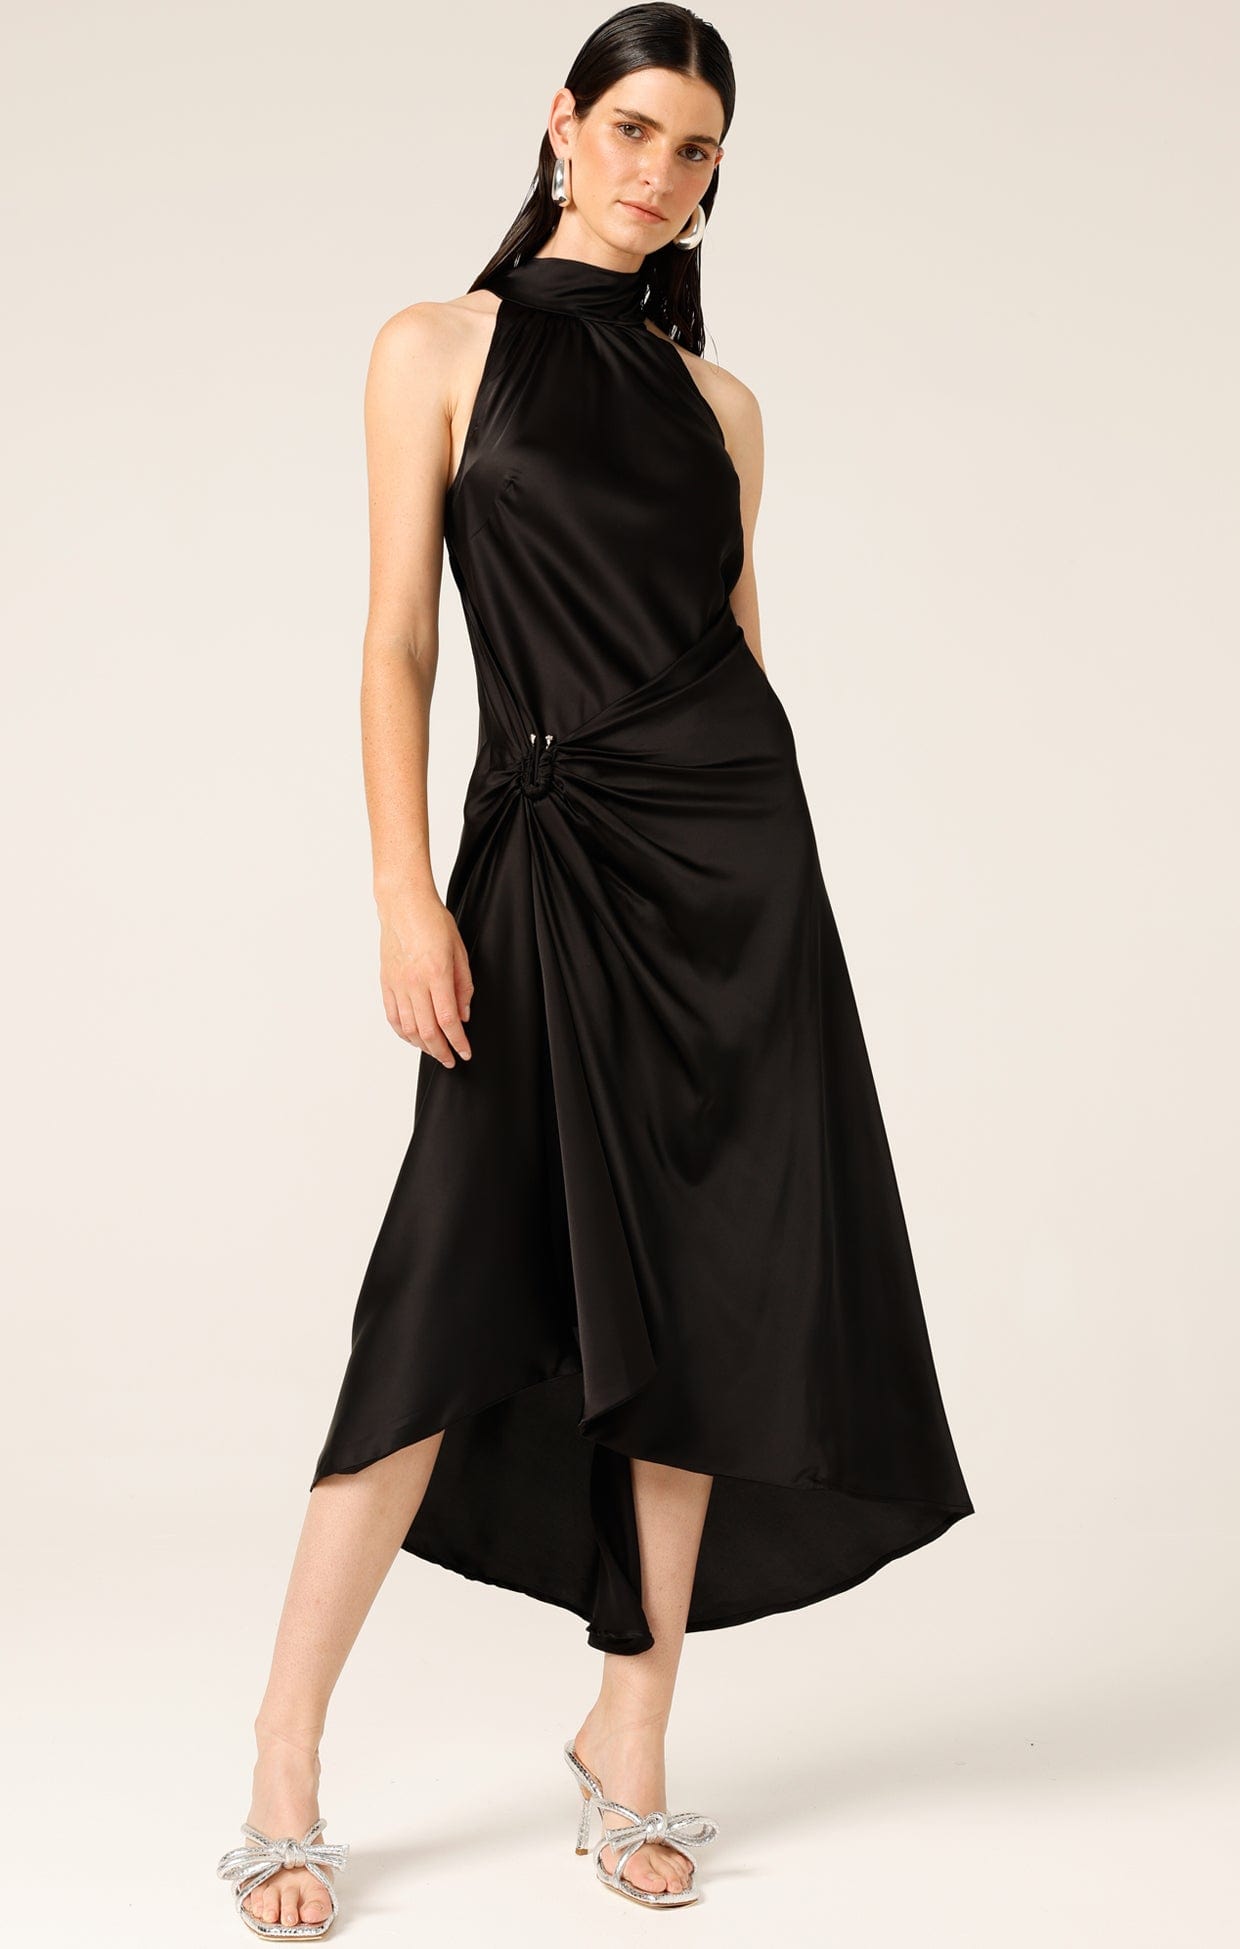 Simply Enchanted Black Halter Midi Dress